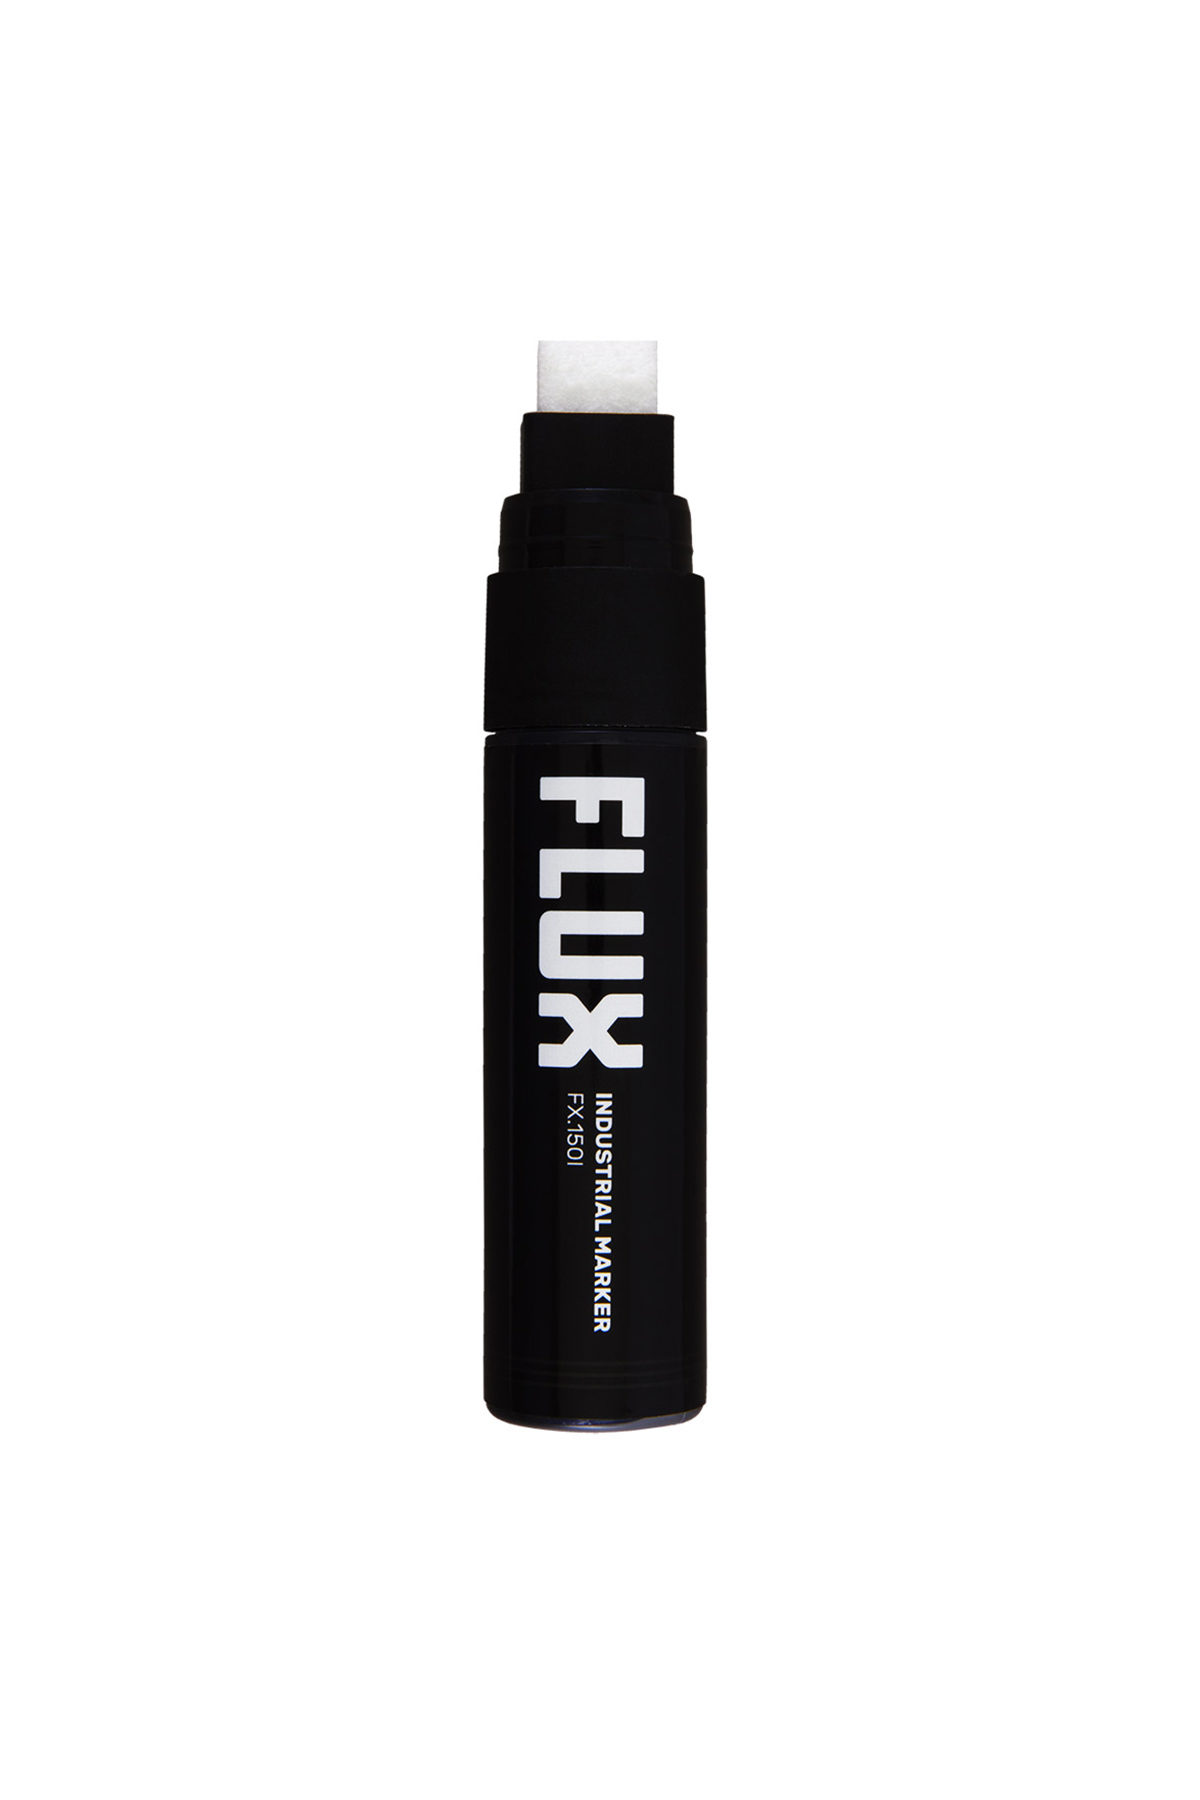 Flux INDUSTRIAL Marker 15mm